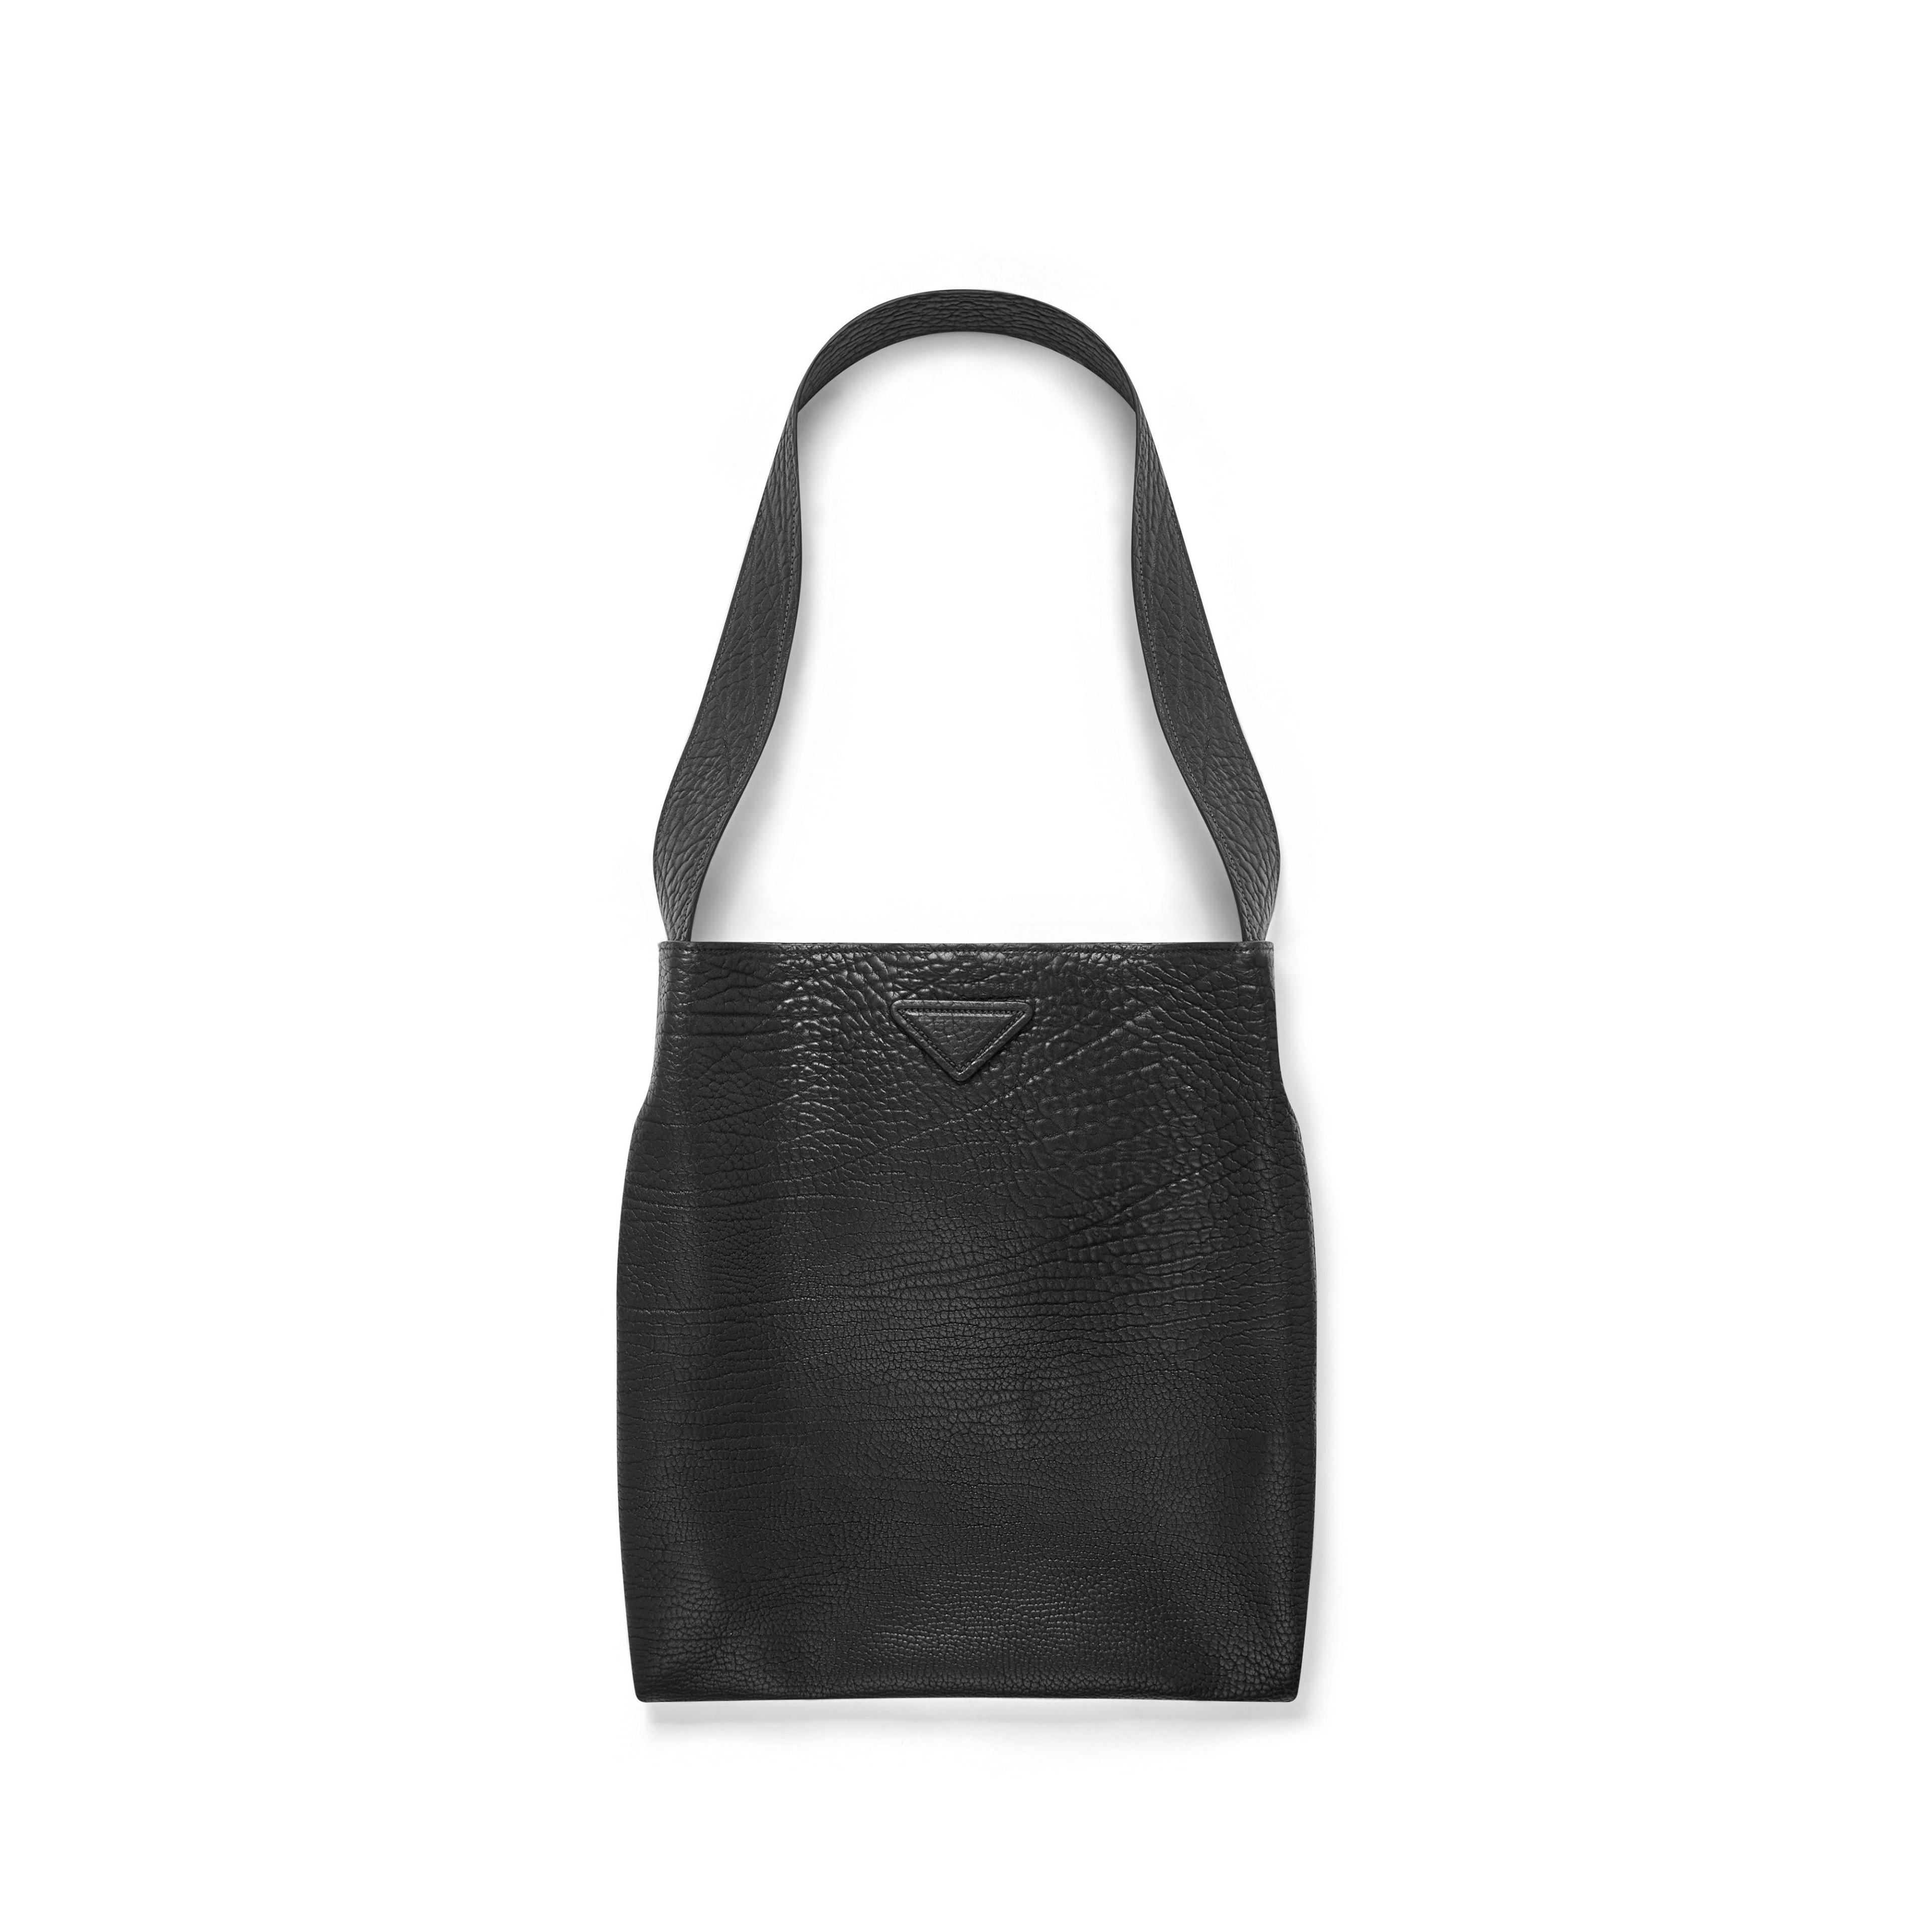 Prada - Men’s Leather Bag - (Black) by PRADA